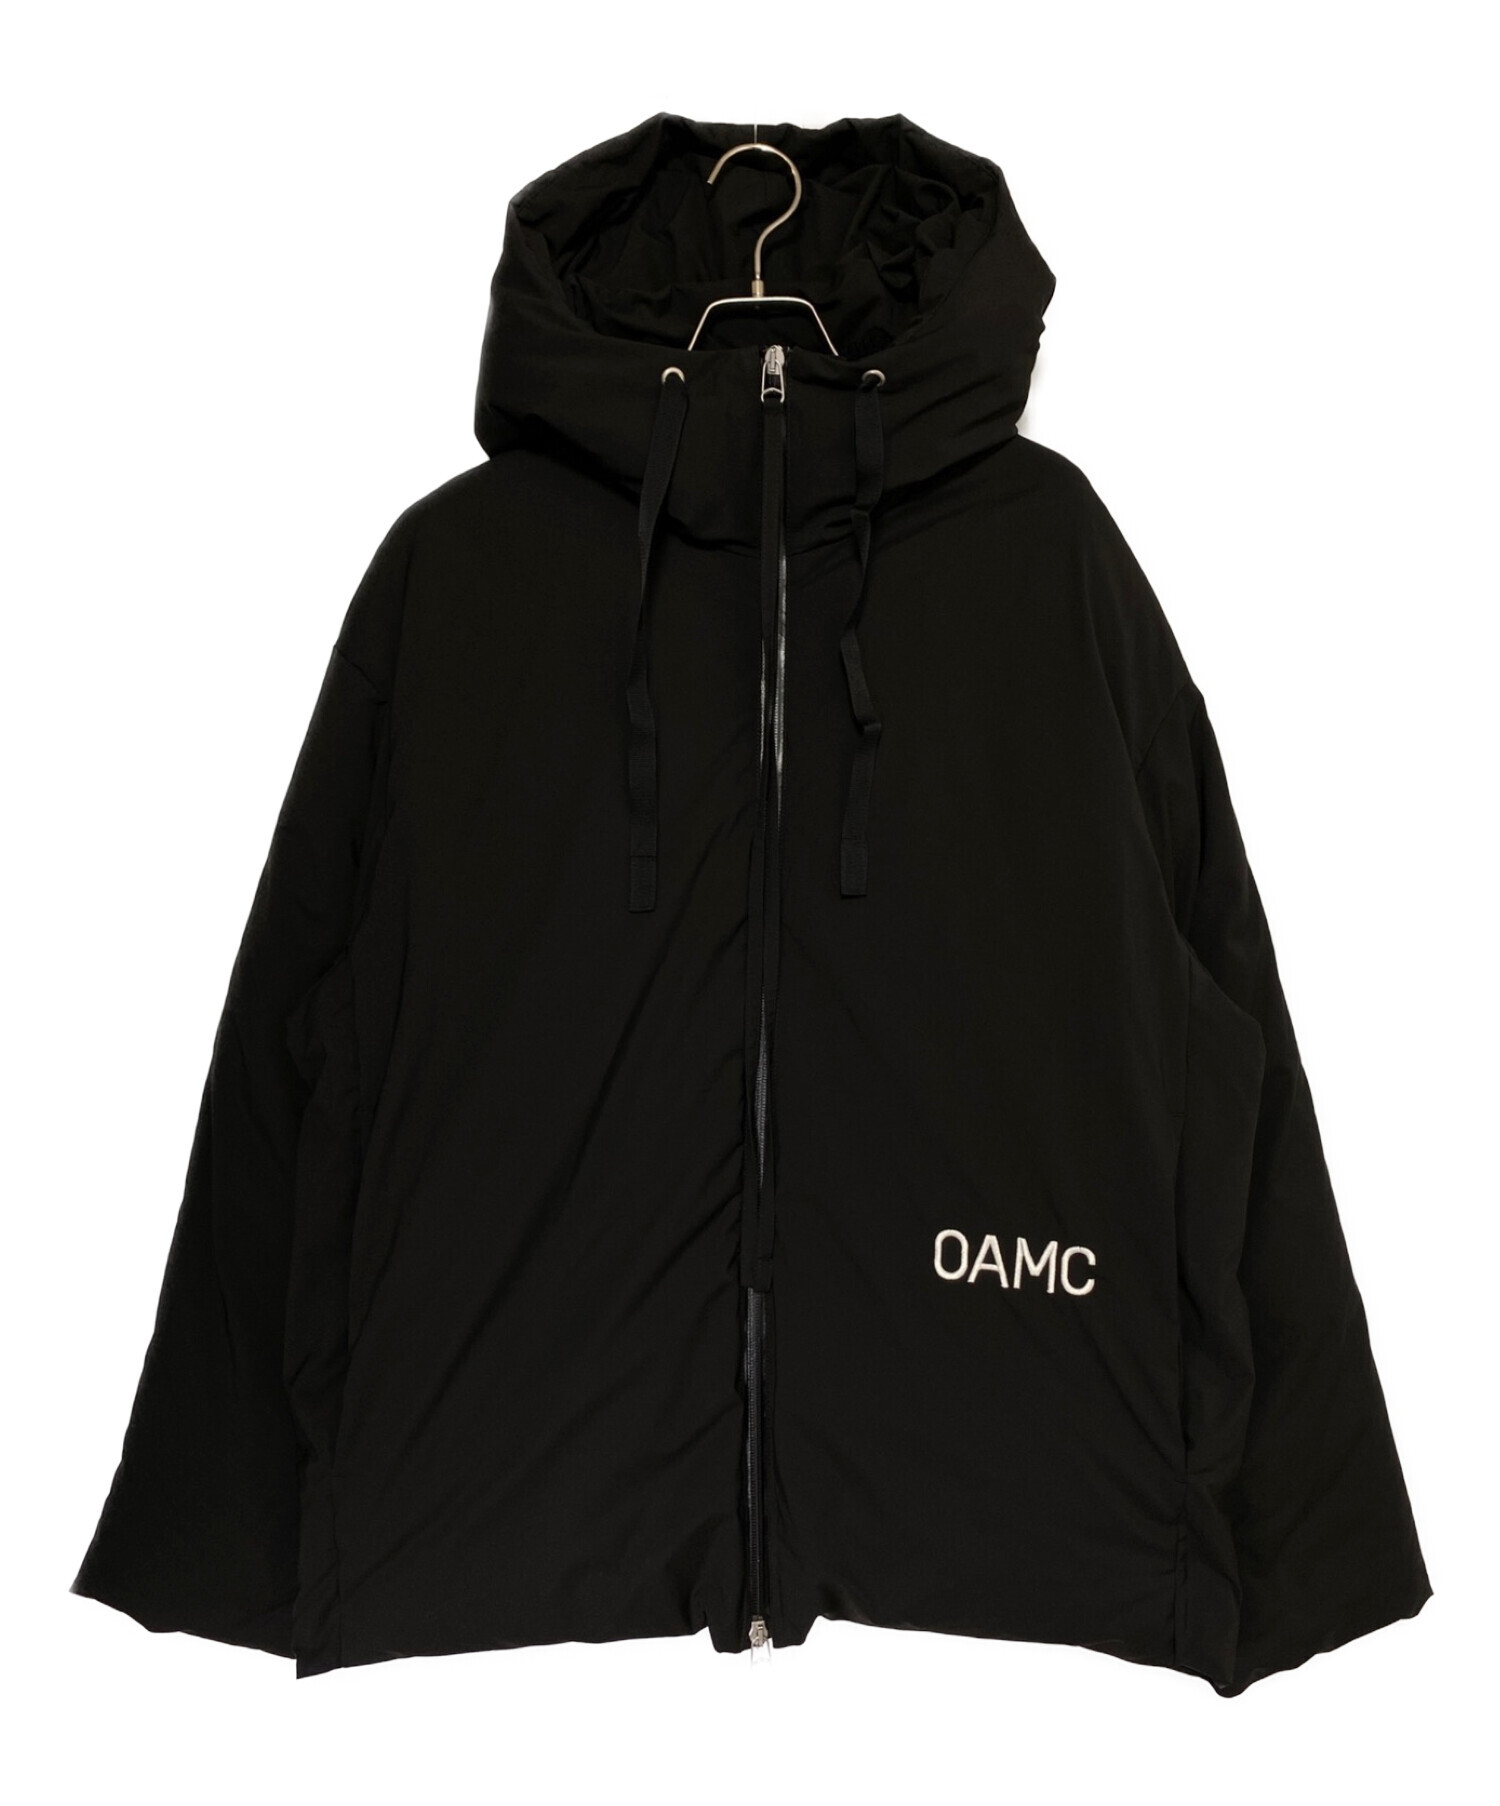 oamc lithium jacket 2.0 XS 超美品